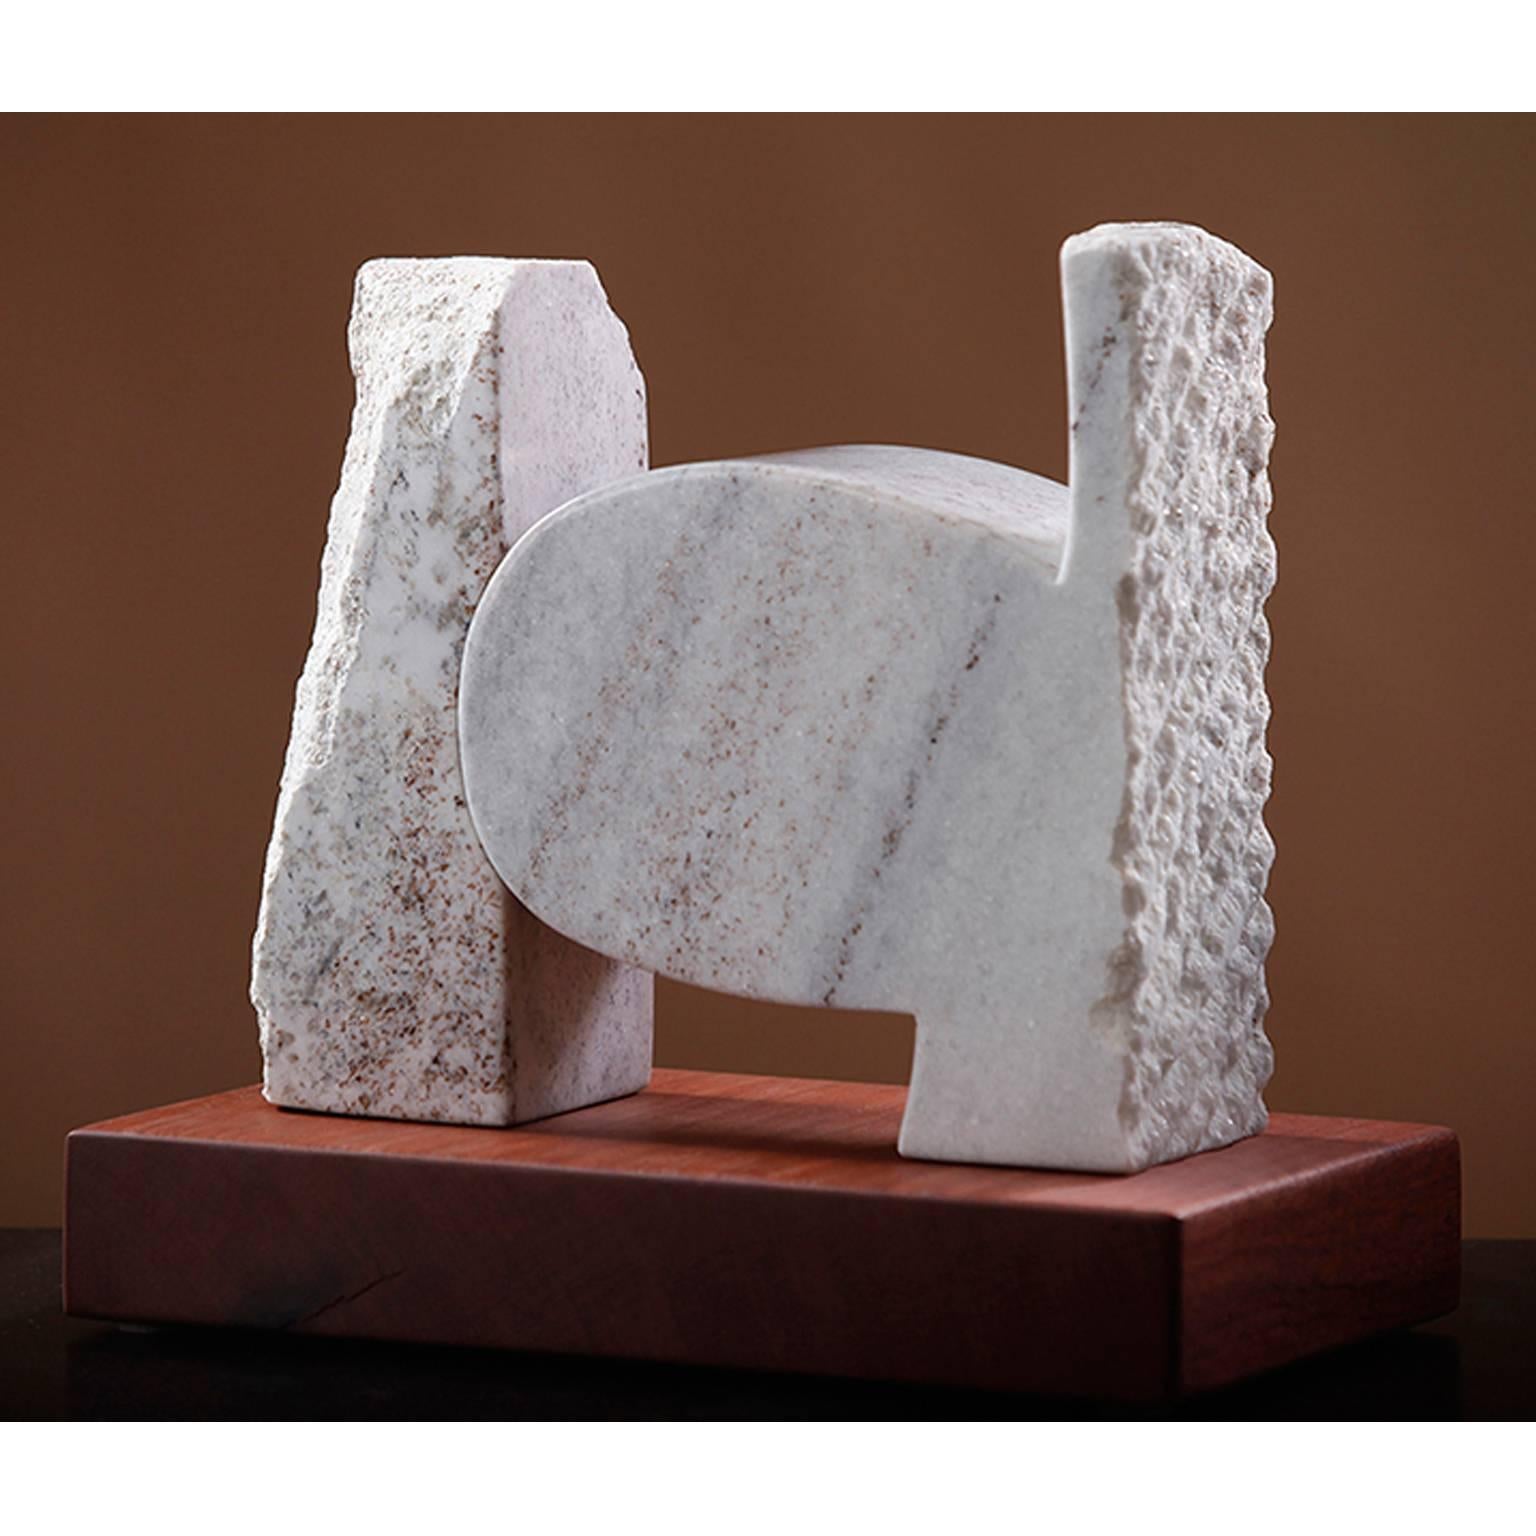 Julie Speidel Abstract Sculpture - Binifat